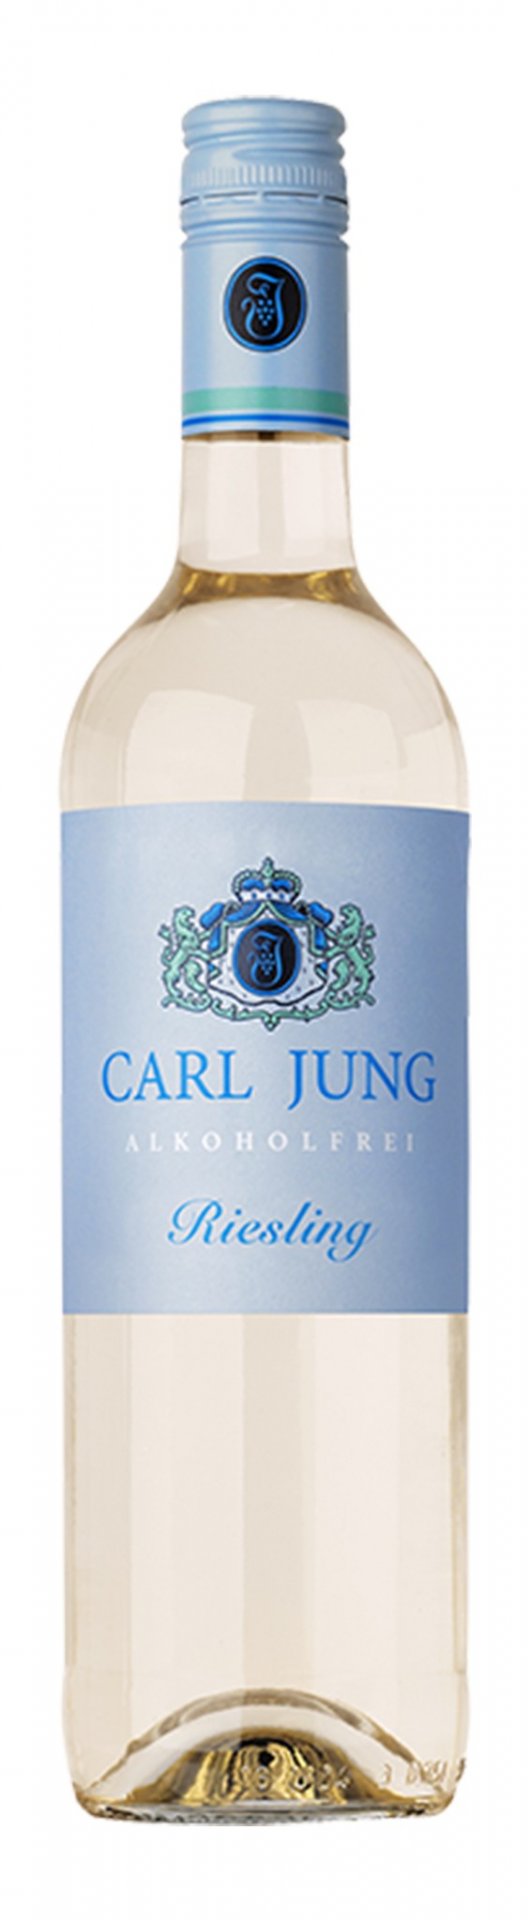 Carl Jung Riesling Feinherb Alcohol-free